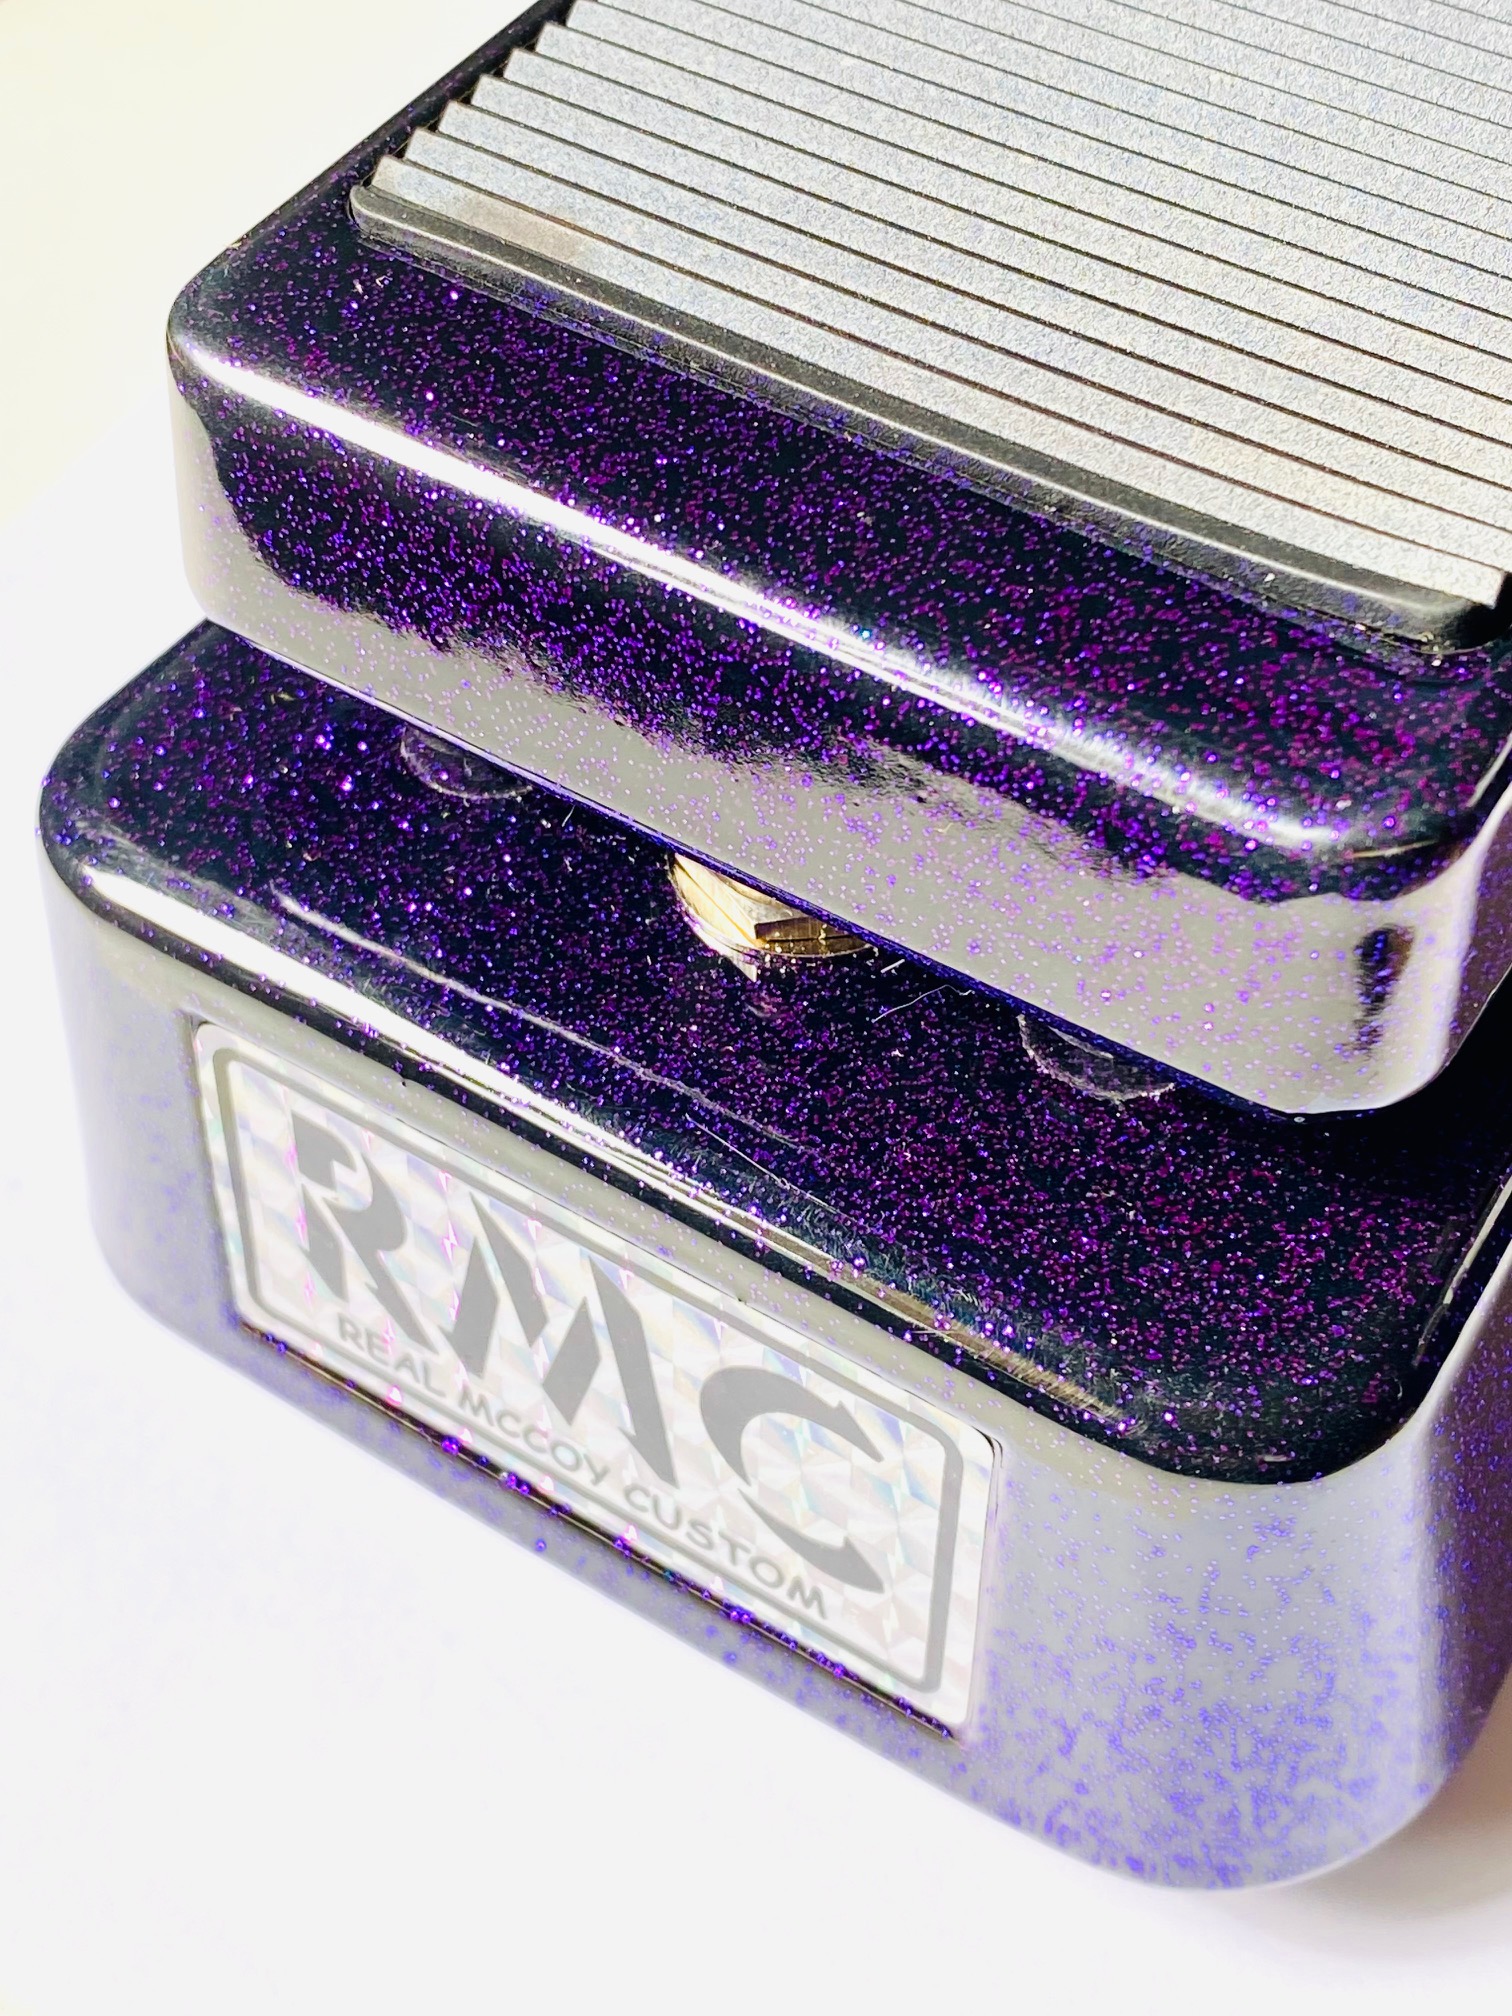 Real McCoy Custom Wah RMC11 Purple Sparkle